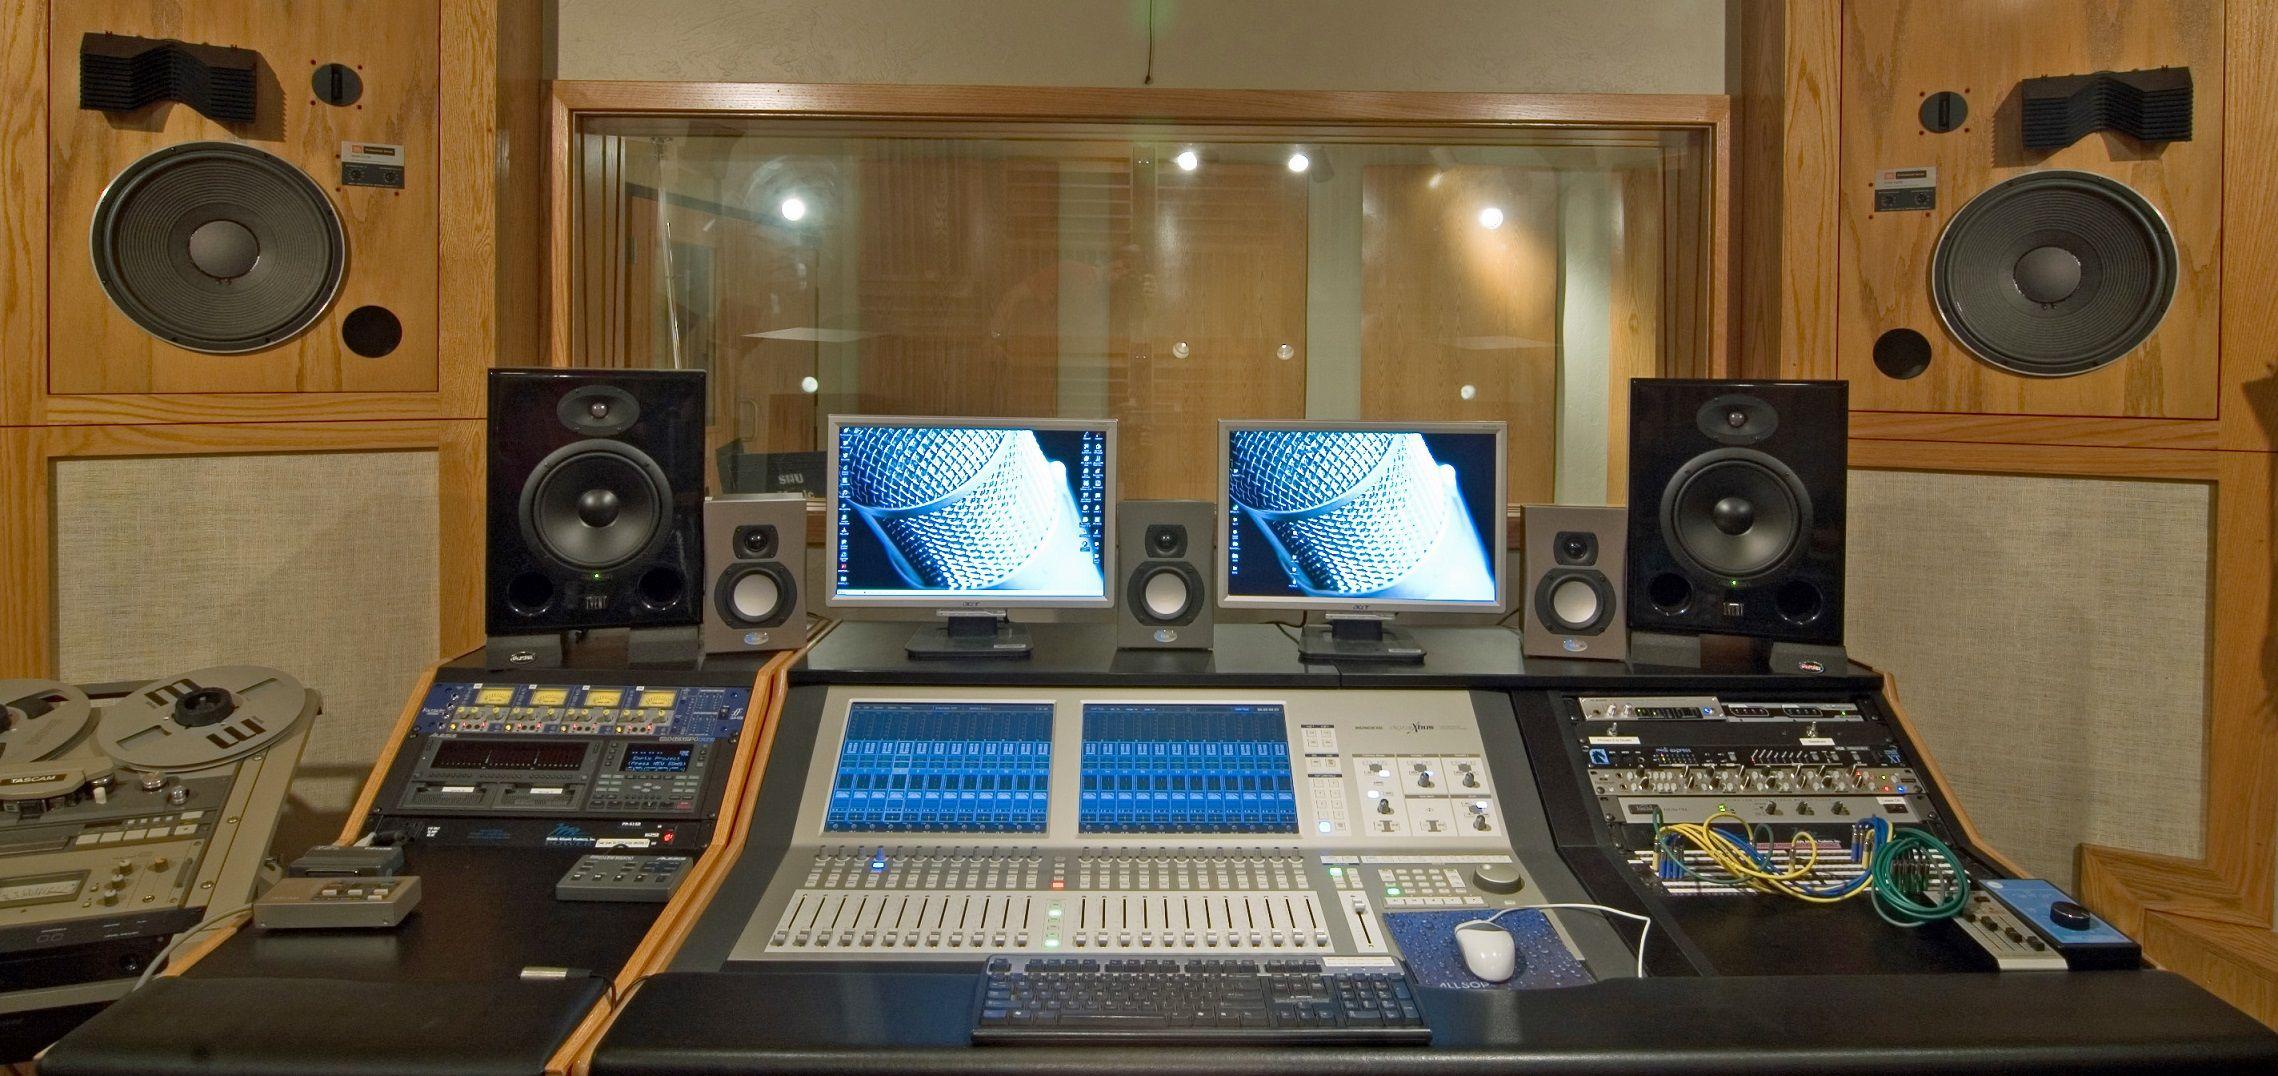 Recording Studio Wallpaper and Background Imagex1076